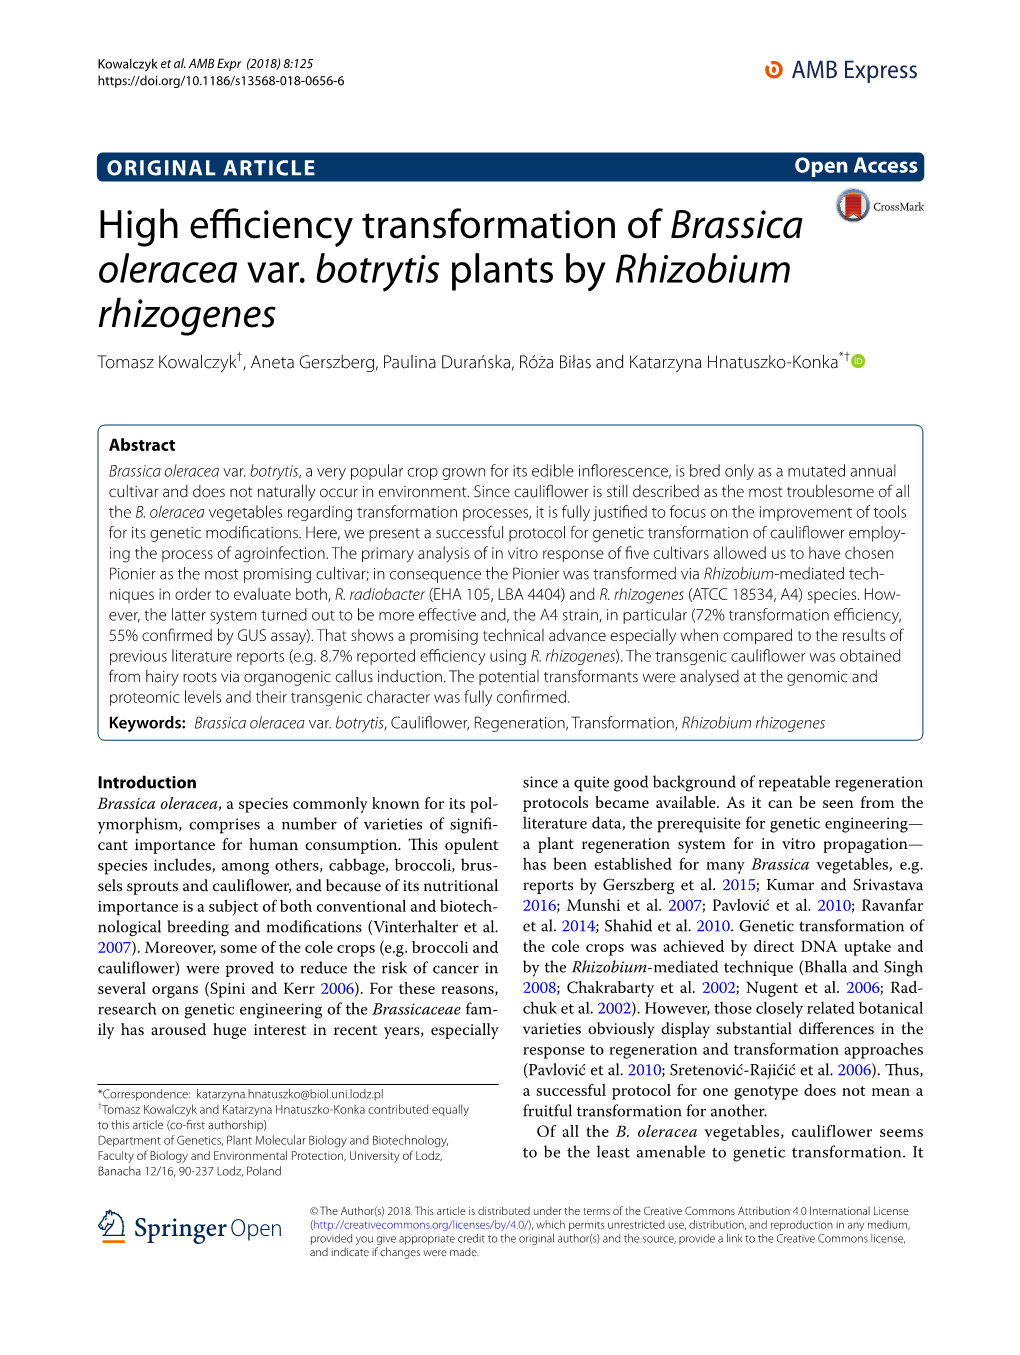 High Efficiency Transformation of Brassica Oleracea Var. Botrytis